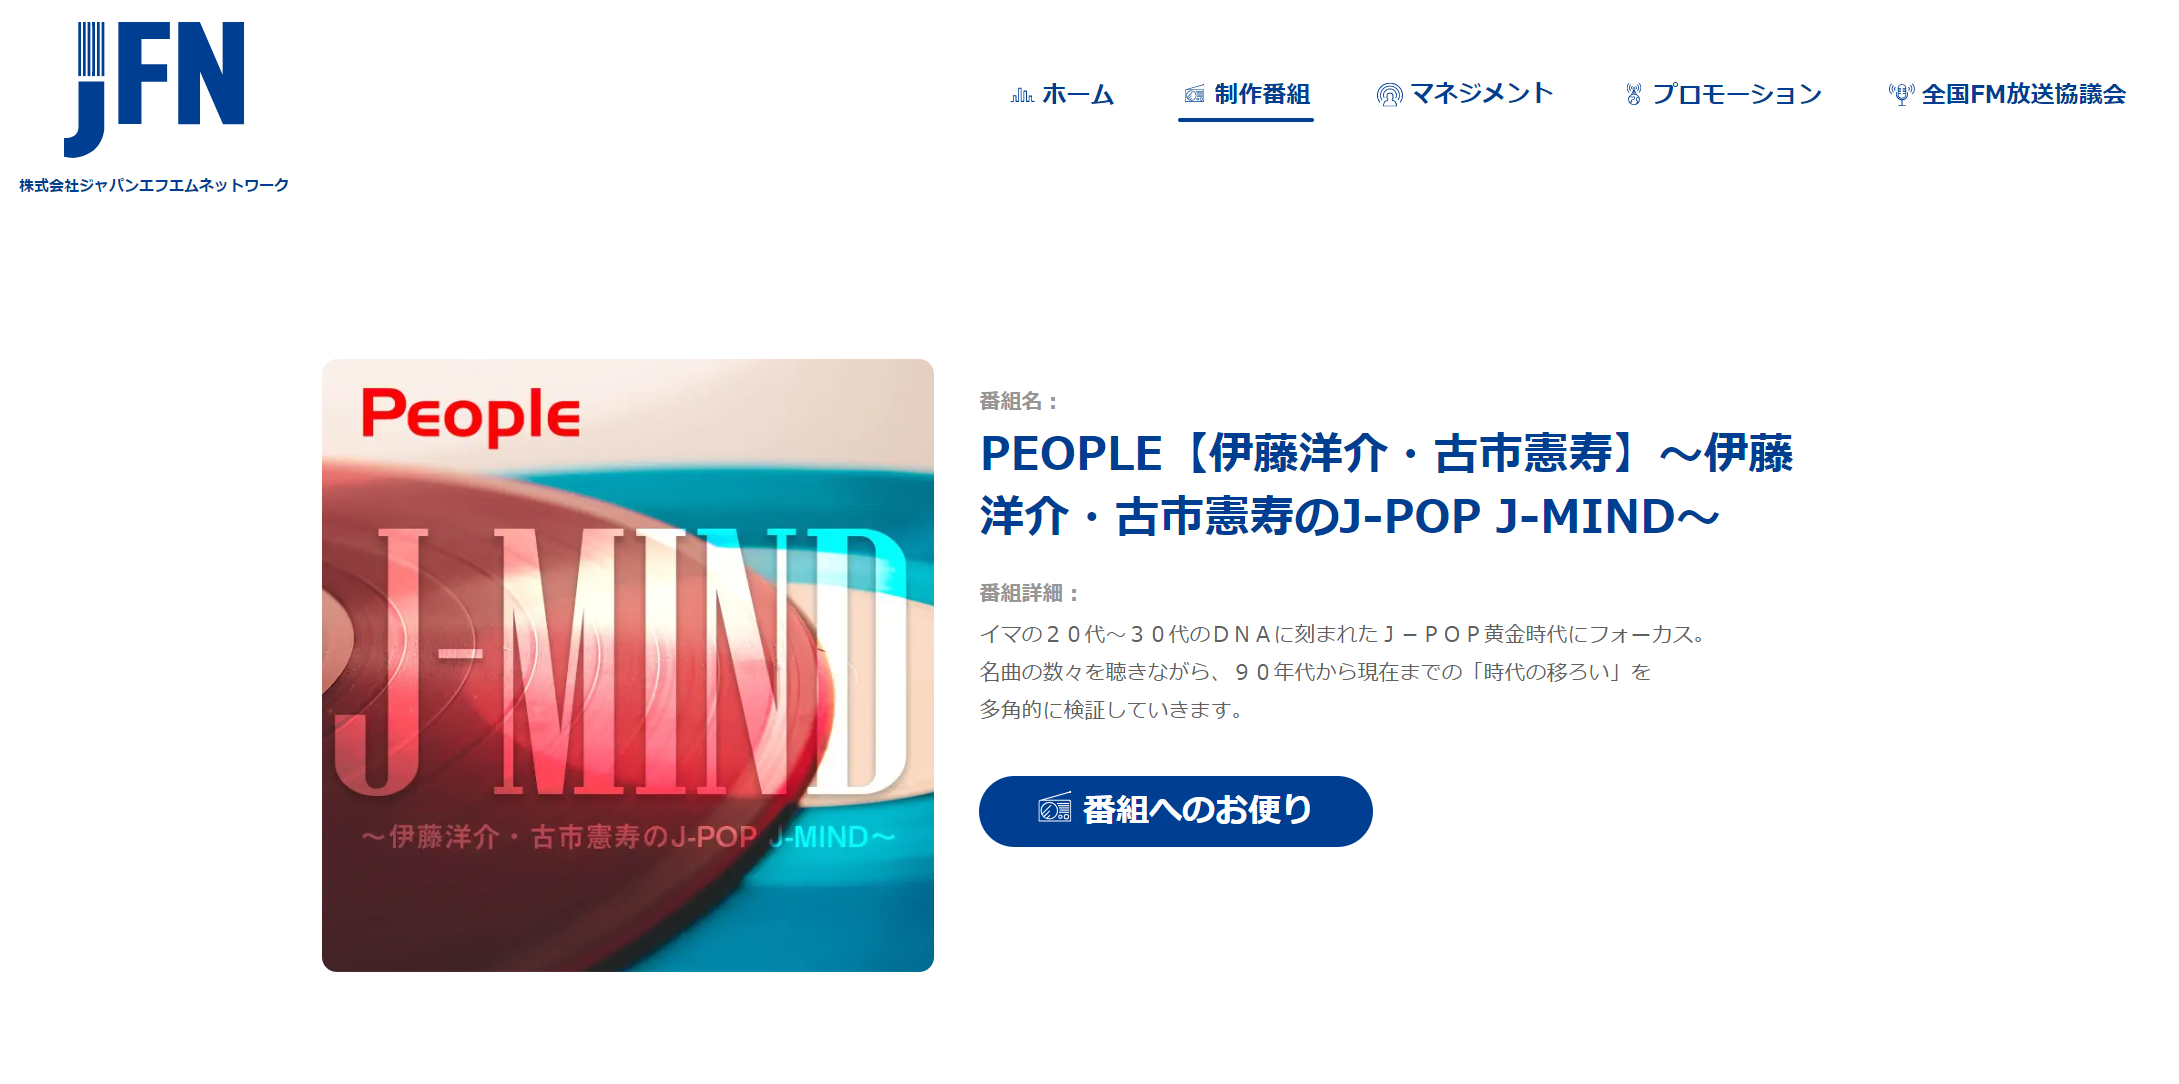 『PEOPLE 〜伊藤洋介・古市憲寿のJ-POP J-MIND〜』の公式サイトのキャプチャ画像